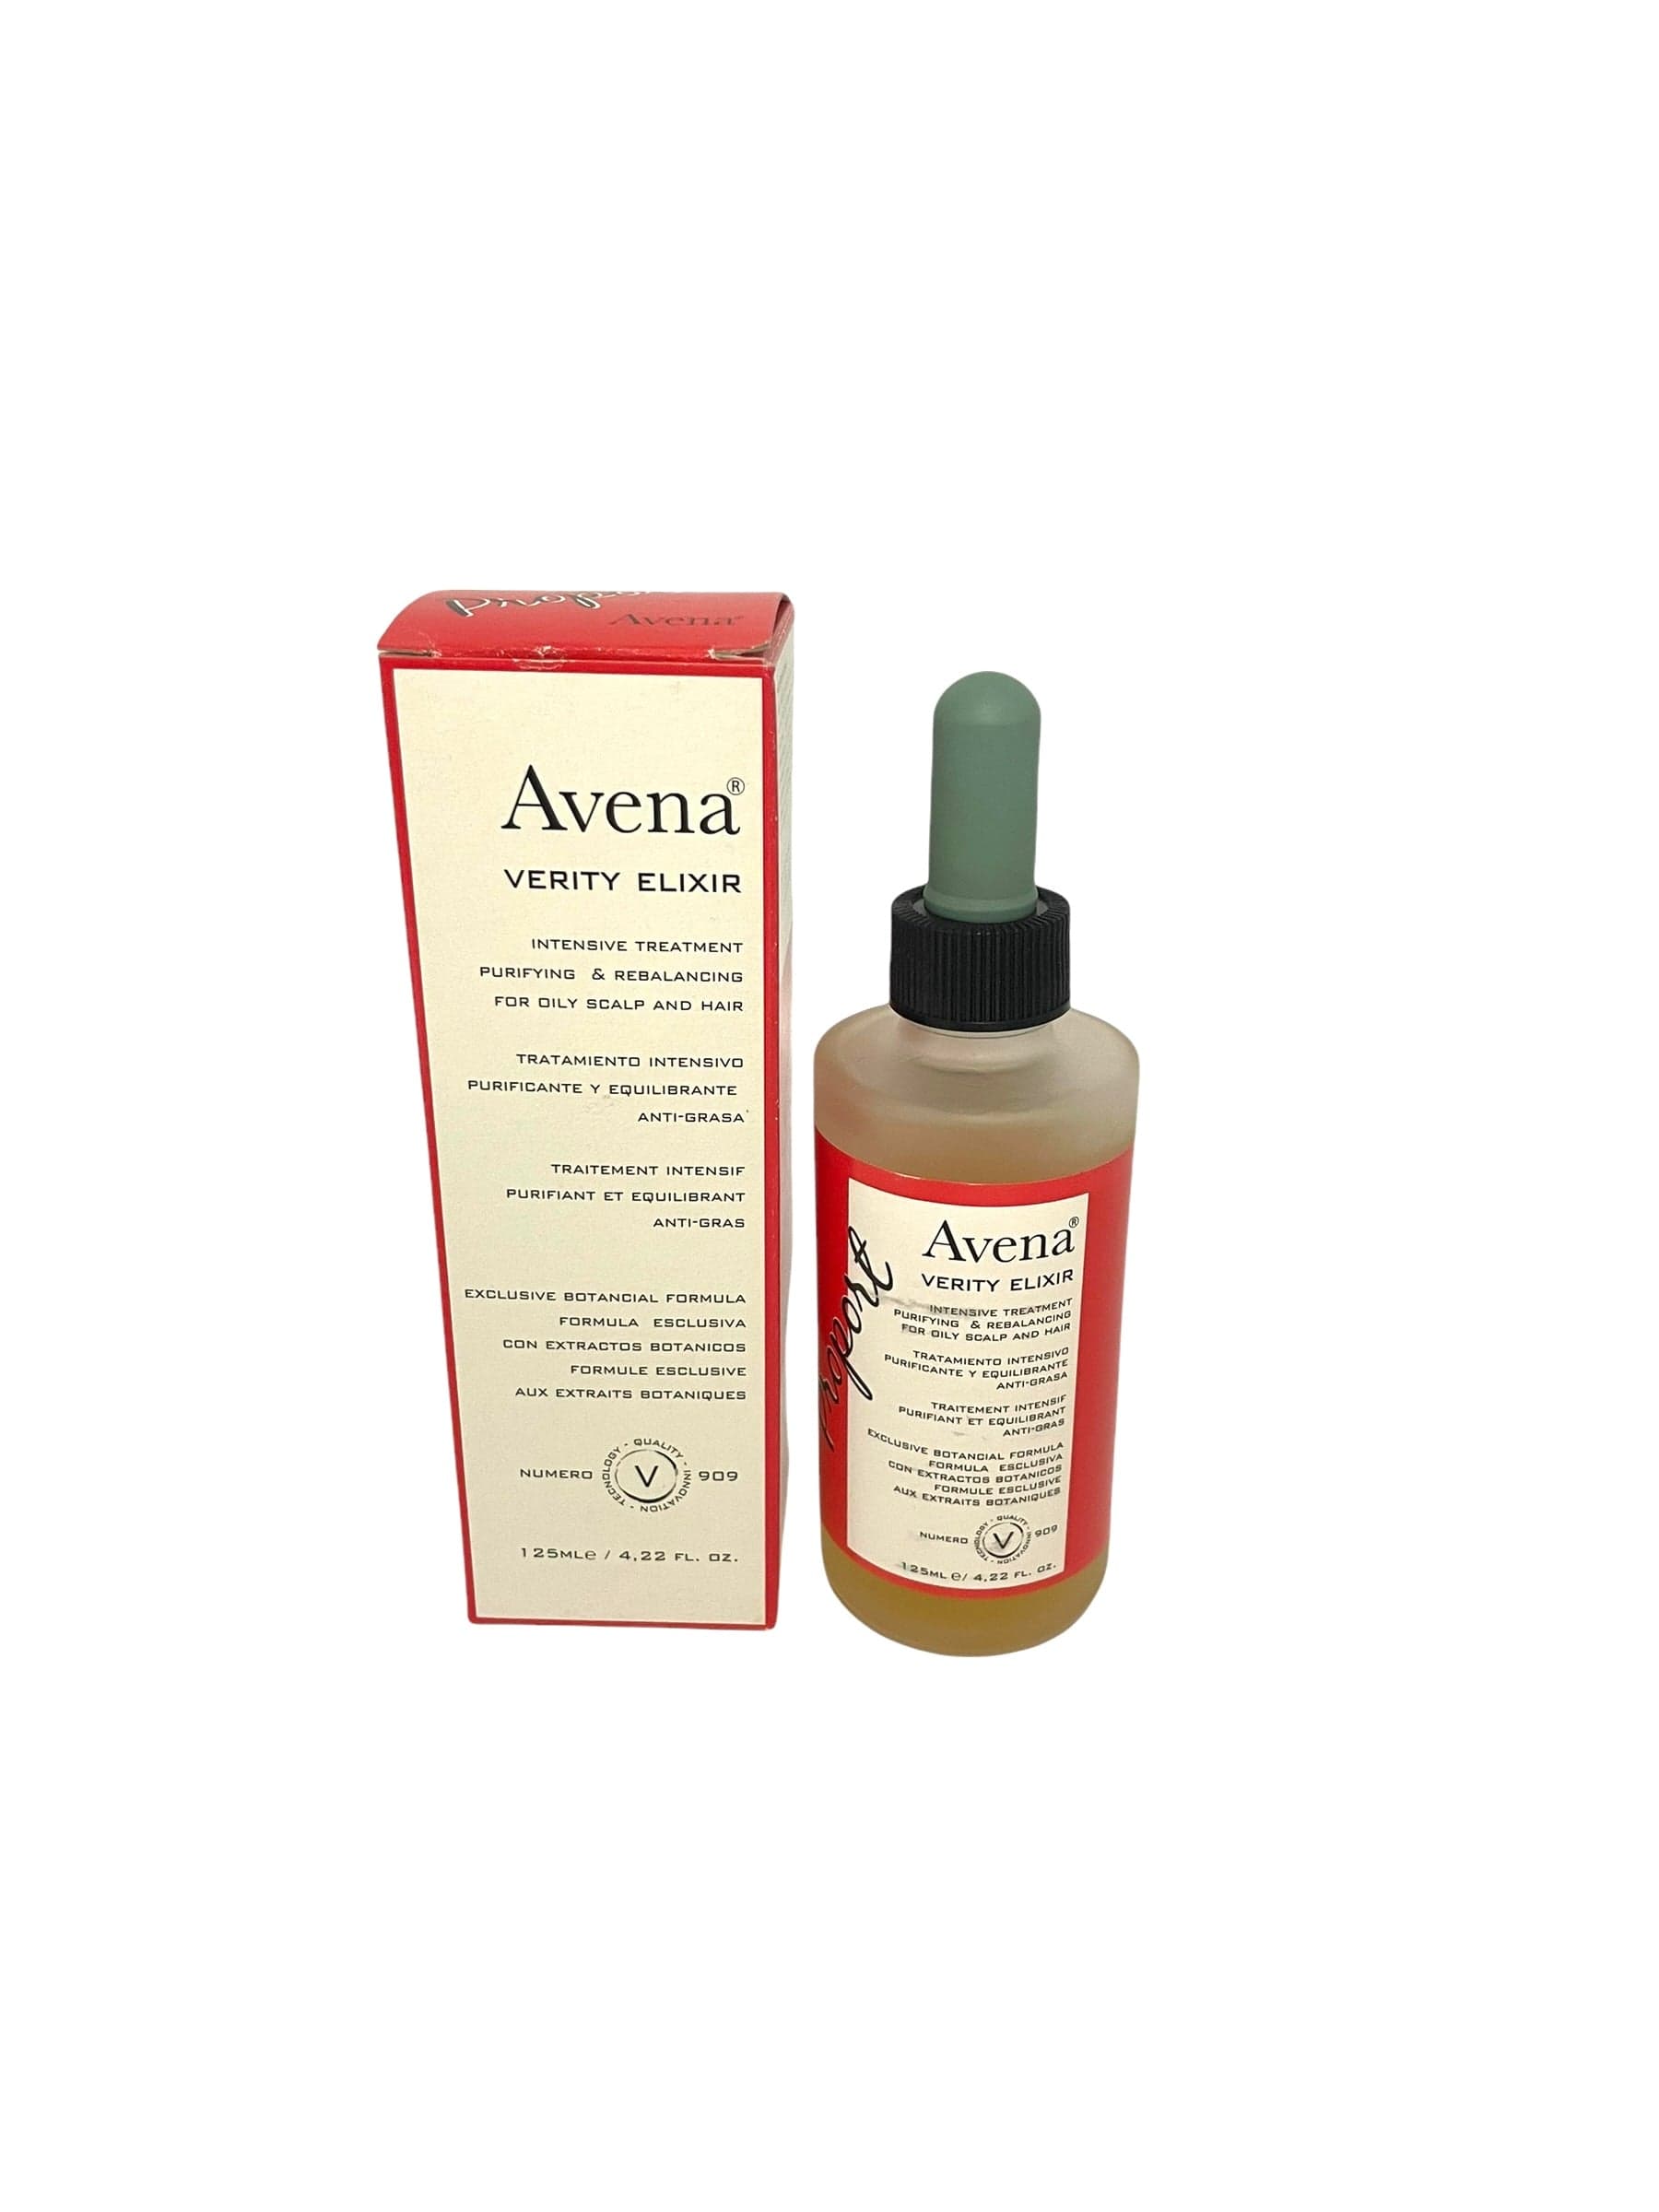 Avena Proport V 909 Oily Hair & Scalp Verity Elixir Treatment 4.22 oz Oily Scalp Treatment